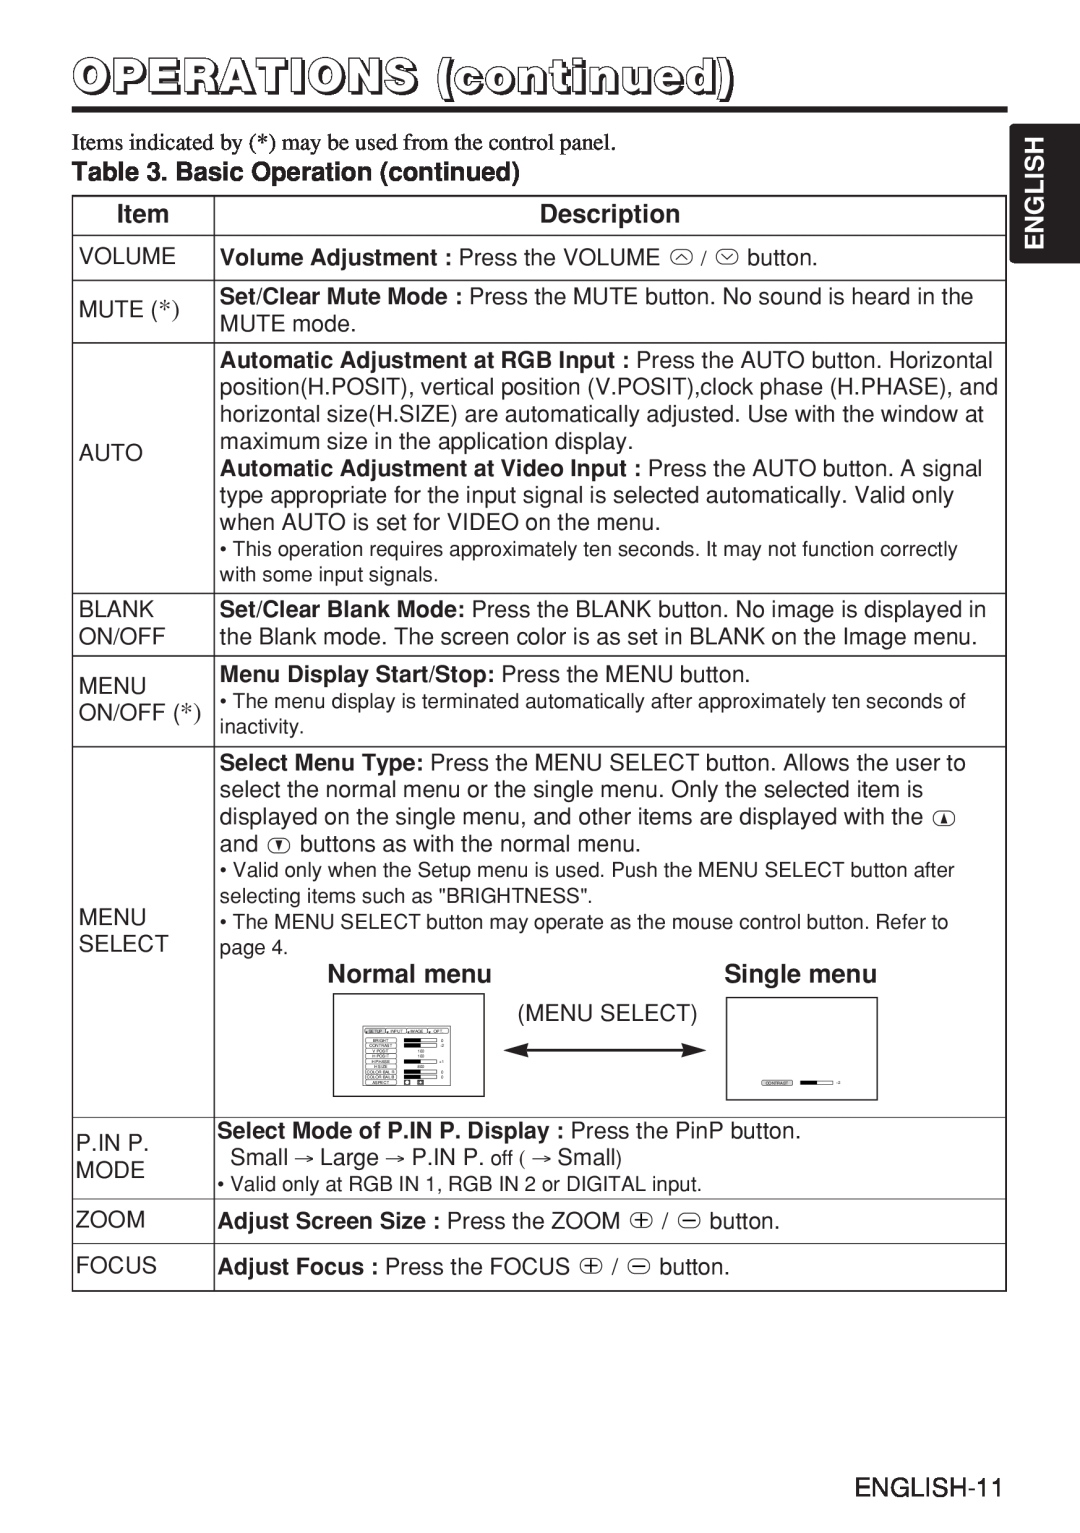 Hitachi CP-X985W Basic Operation continued, Normal menu, Single menu, OPERATIONS continued, Description, English 